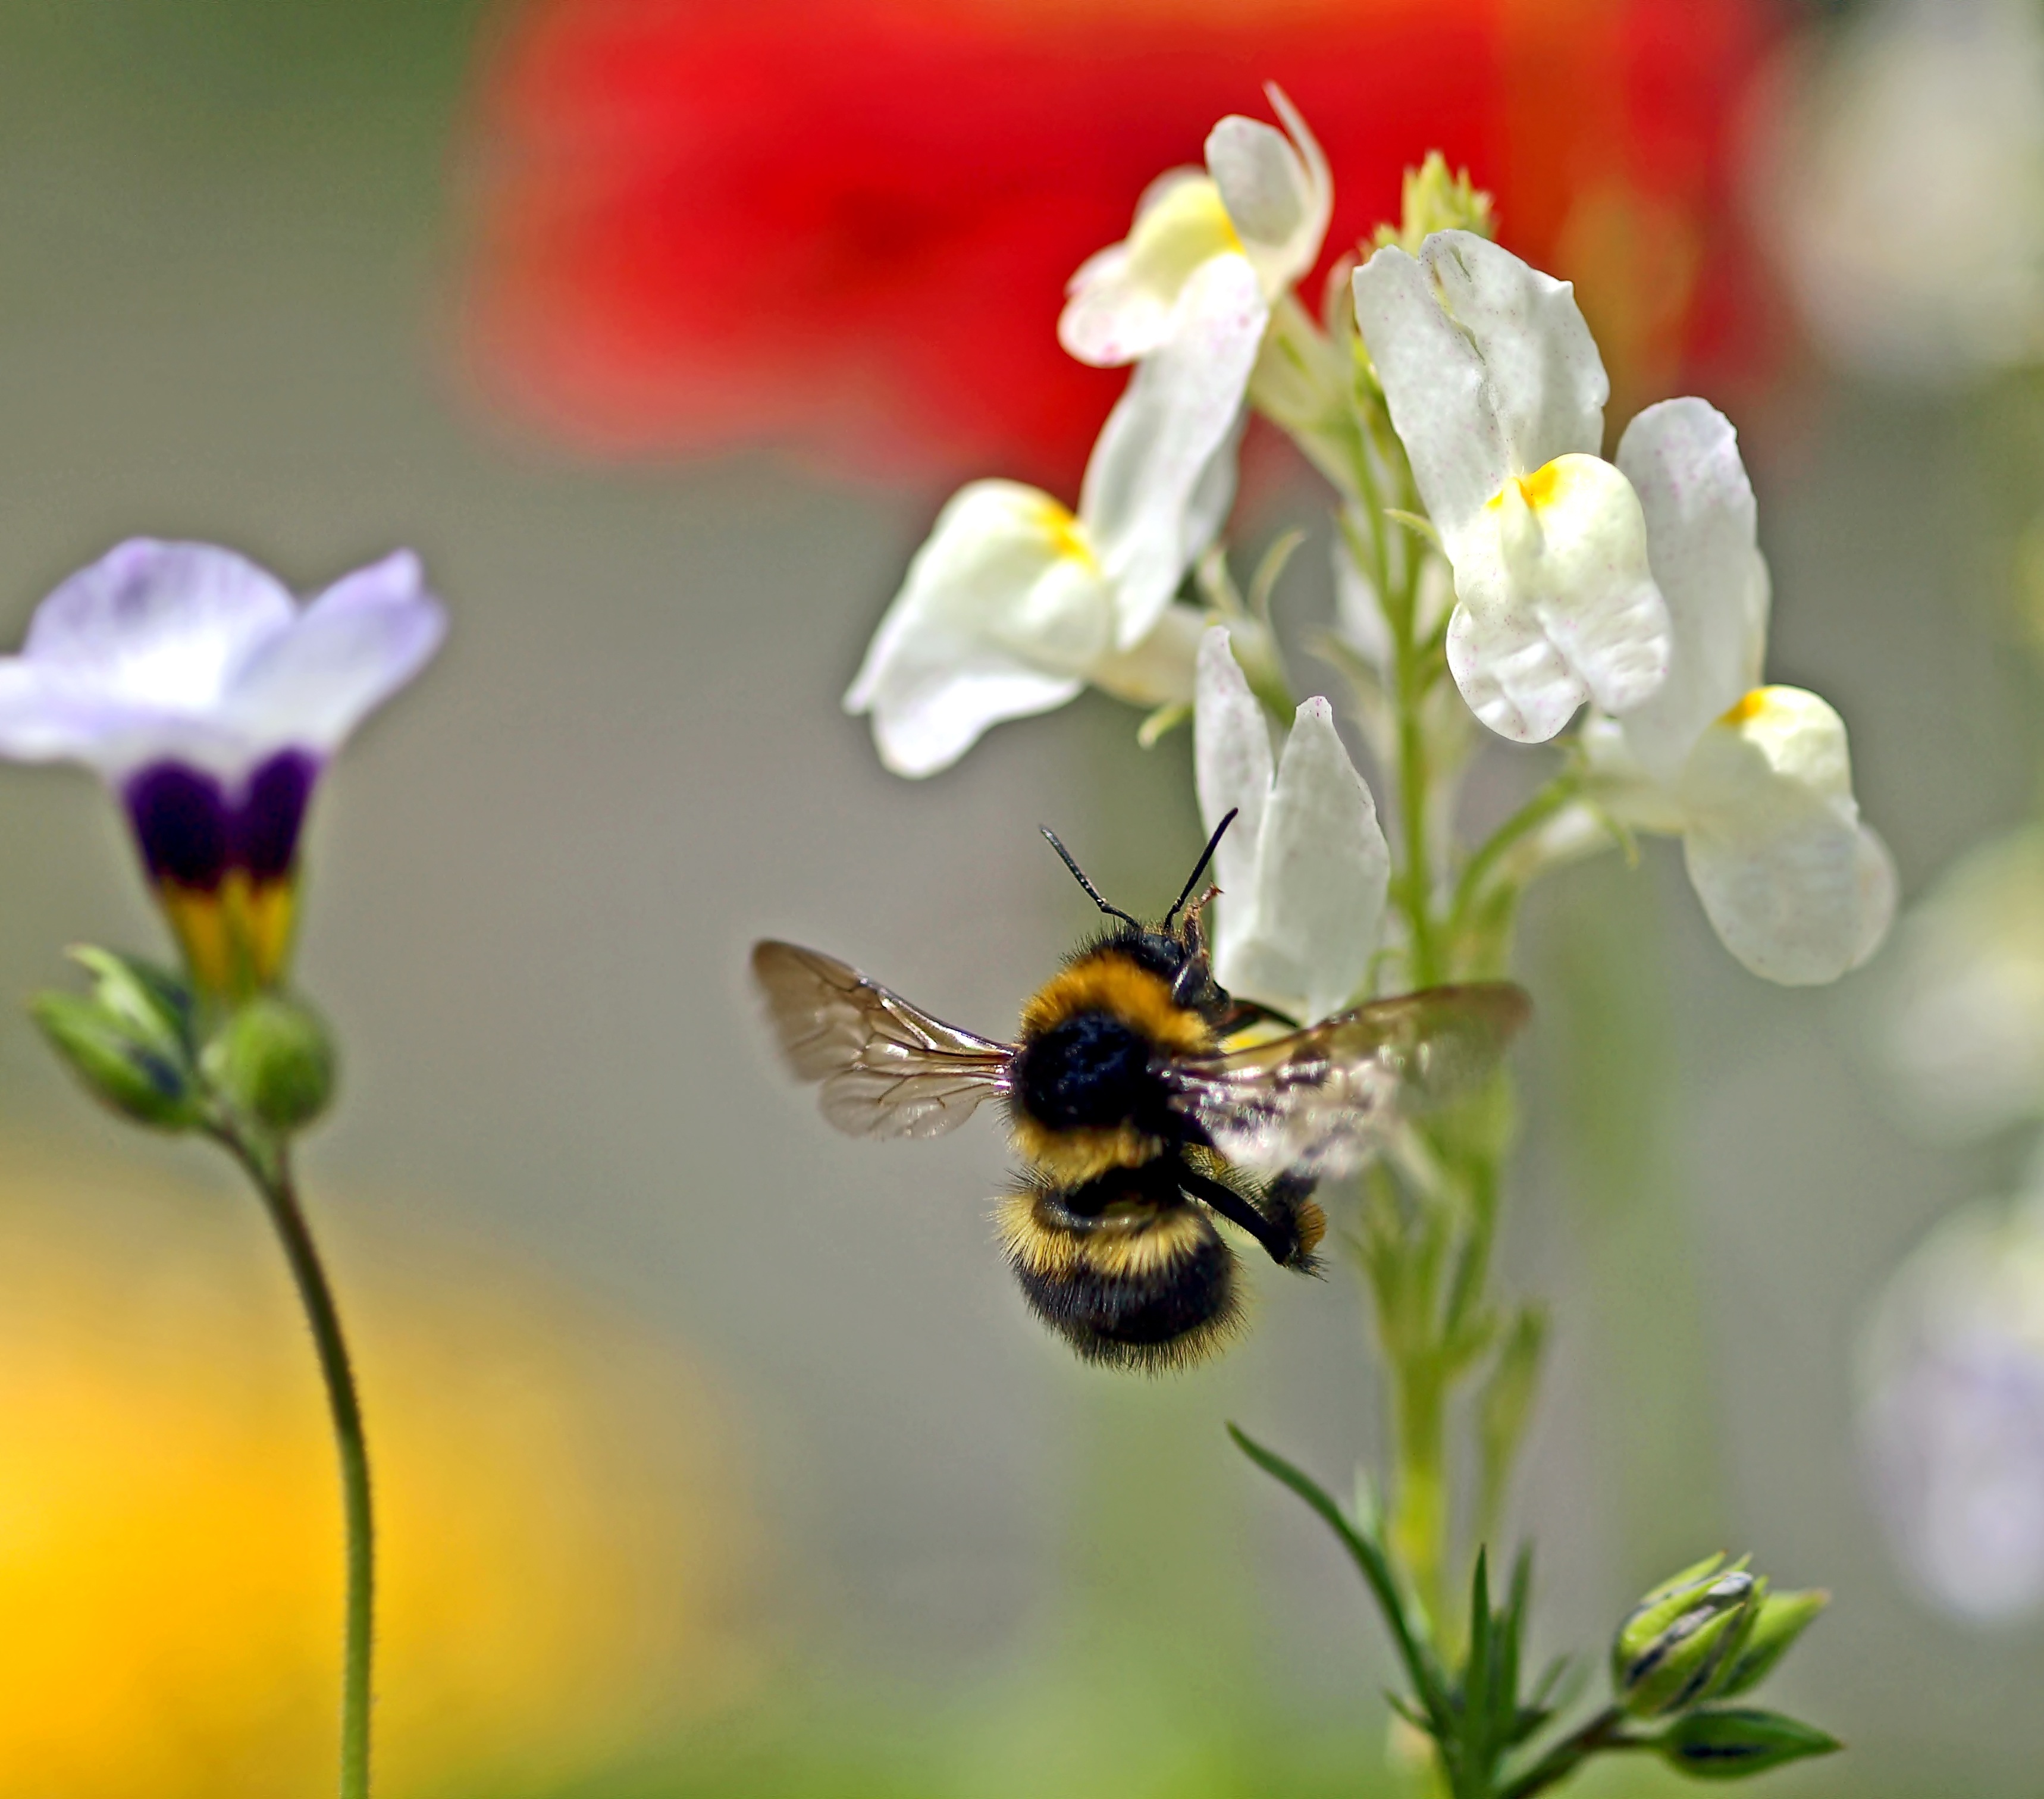 Bees in the garden photo